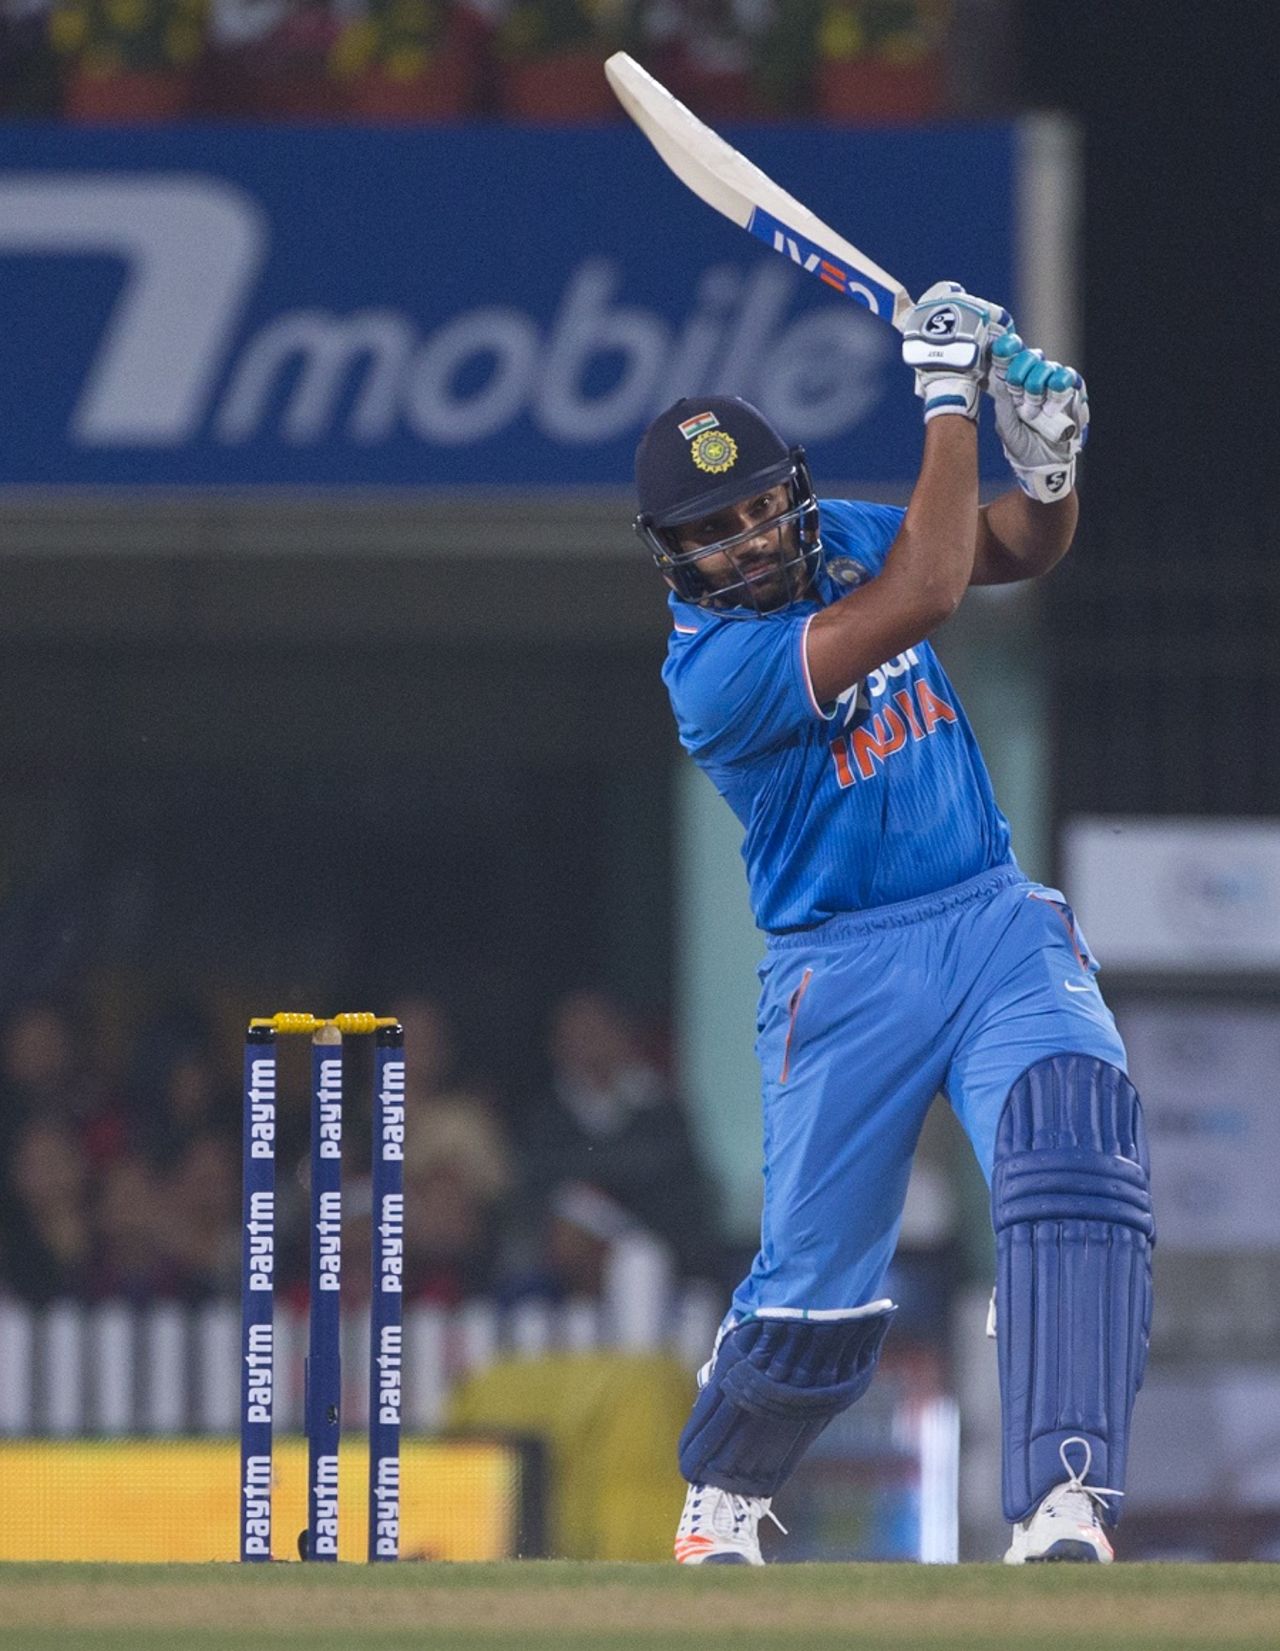 Rohit Sharma powers a drive down the ground, India v Sri Lanka, 2nd T20I, Ranchi, February 12, 2016